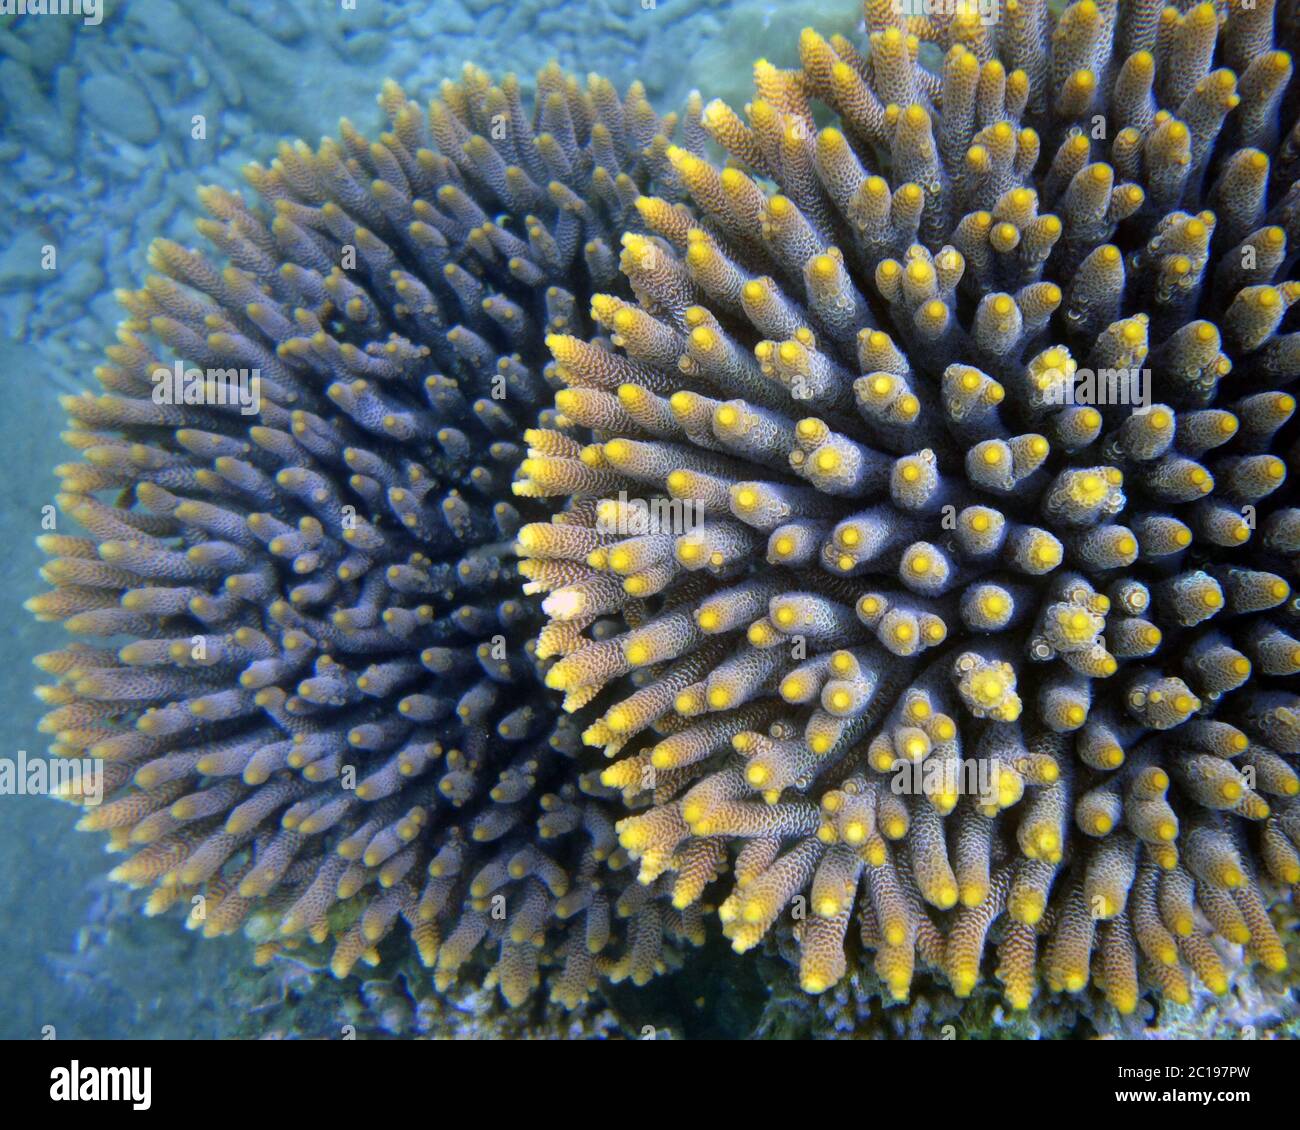 Detail of healthy Acropora coral colonies underwater, Great Barrier Reef, Queensland, Australia Stock Photo